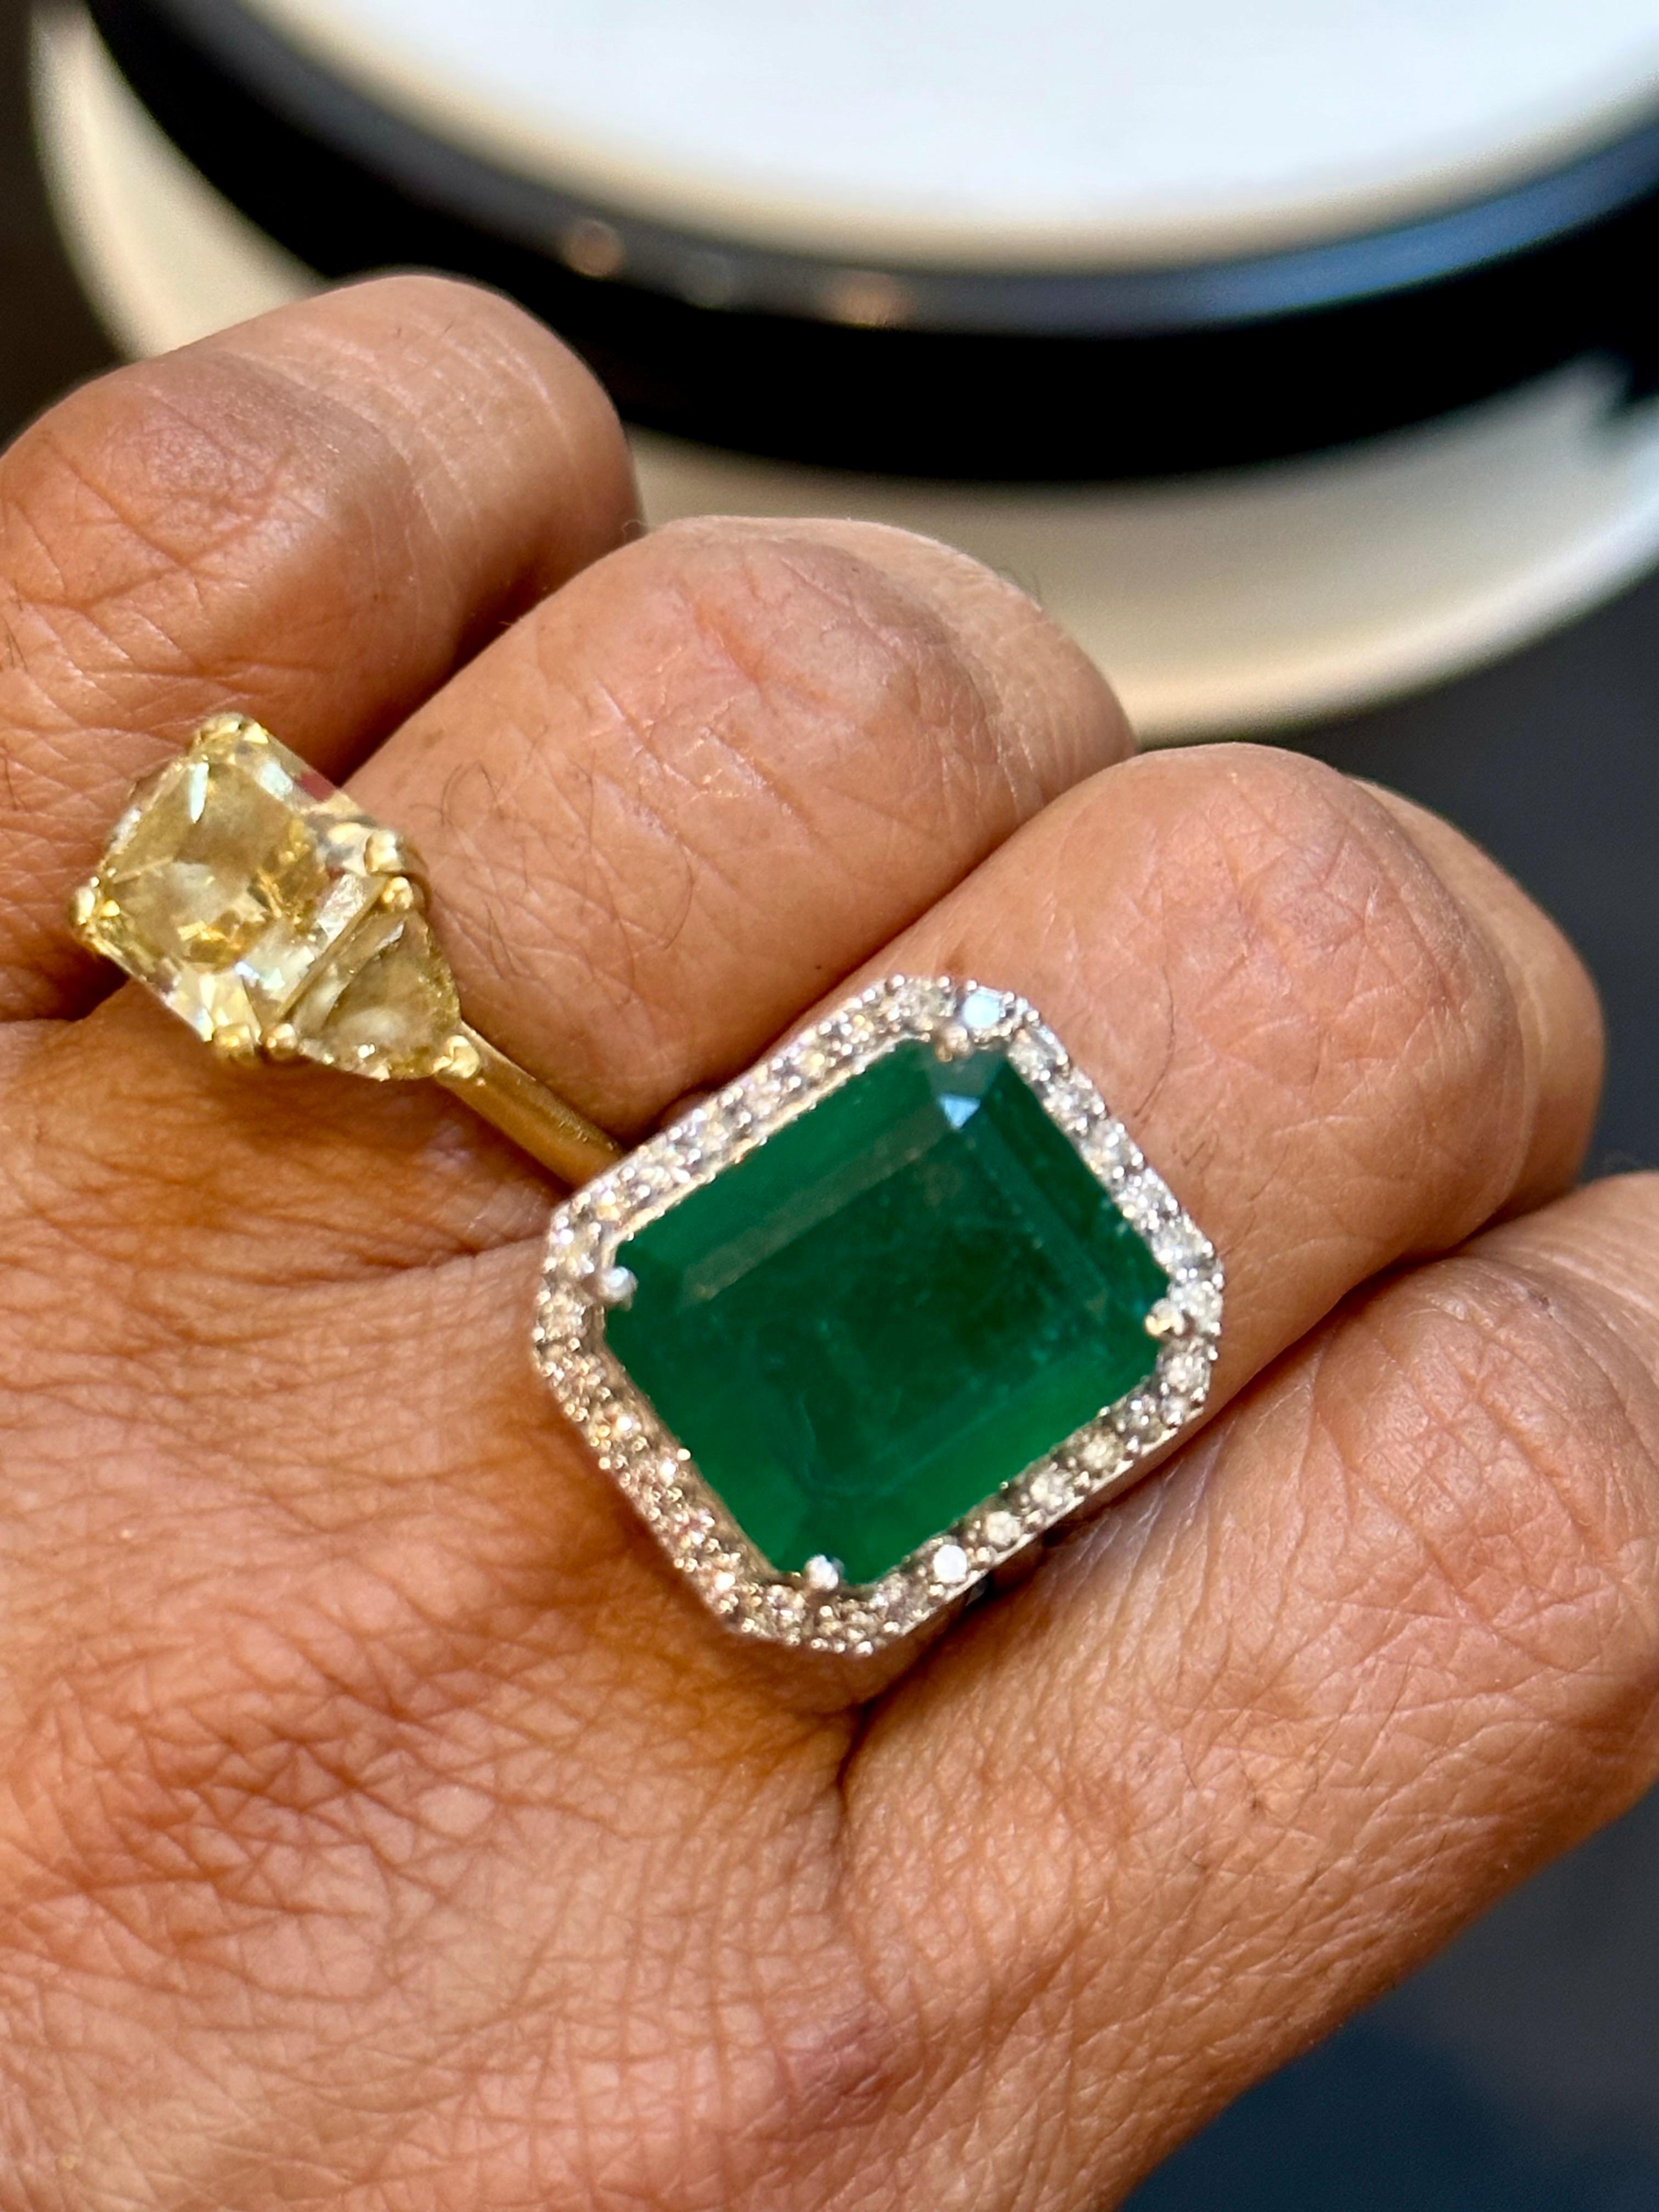 Women's Natural 13 Carat Emerald Cut Zambian Emerald & Diamond Ring in 14kt White Gold For Sale